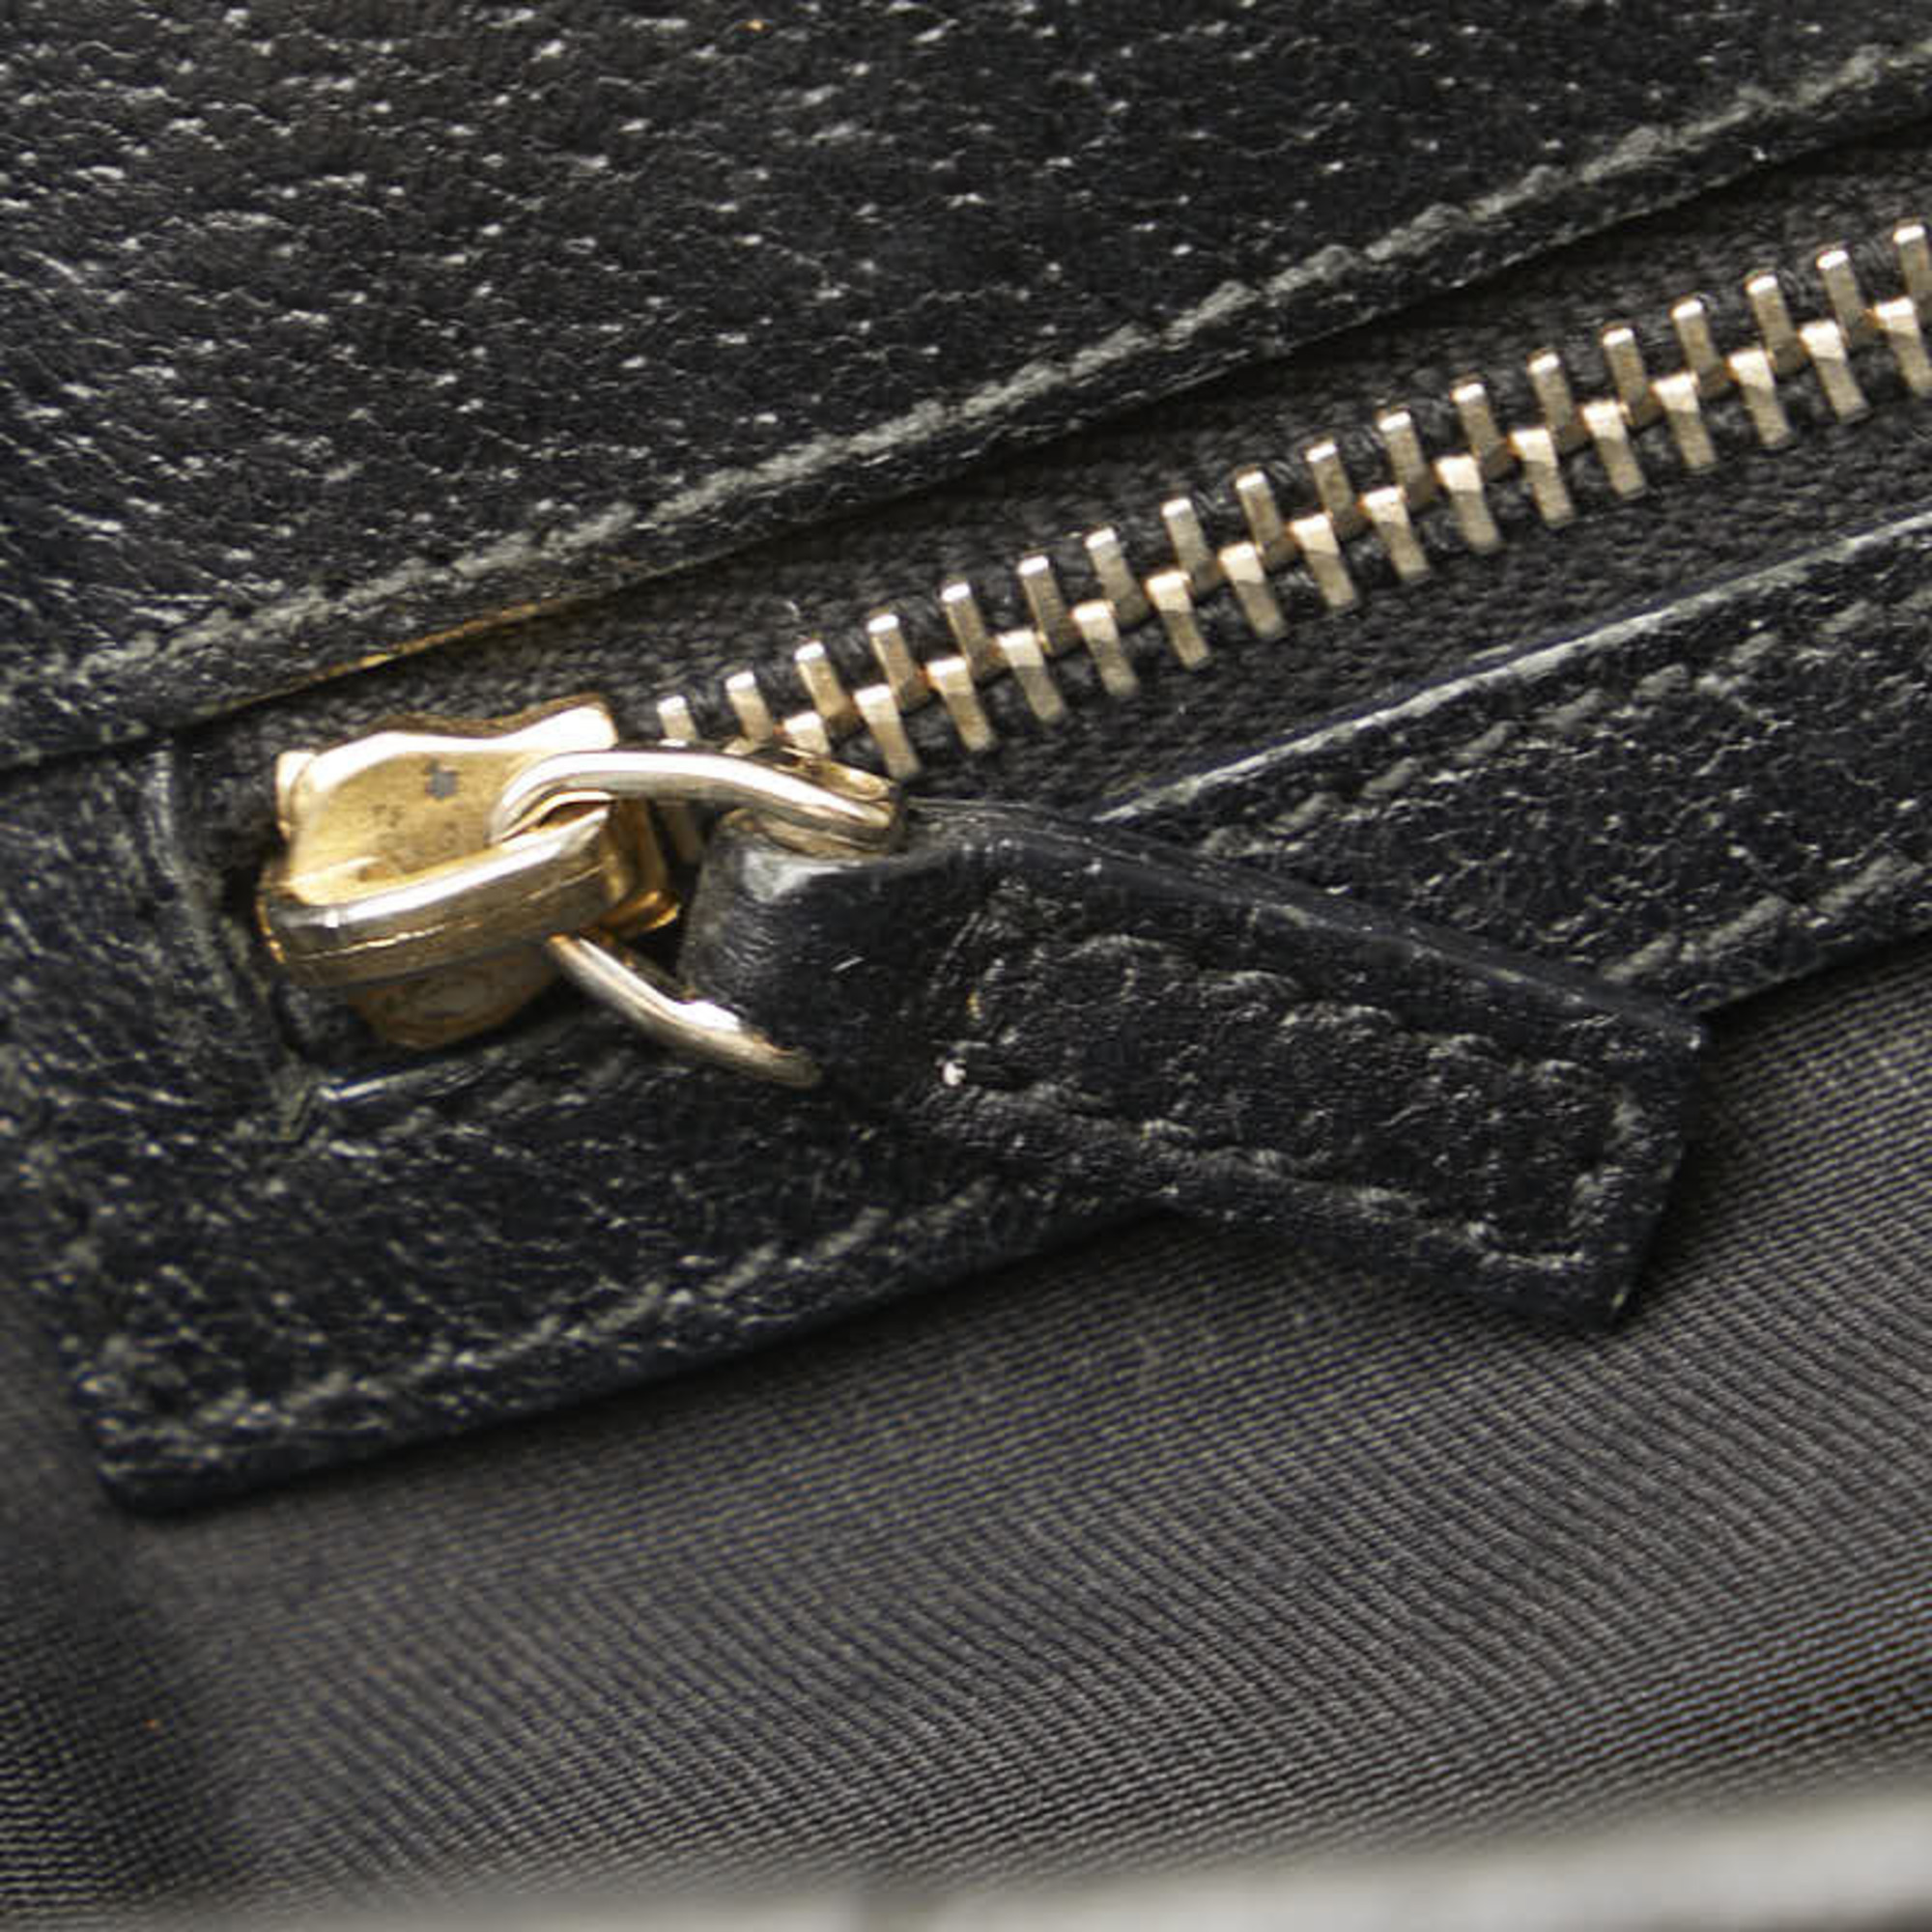 Gucci GG Canvas New Jackie Handbag Tote Bag 145818 Black Leather Women's GUCCI